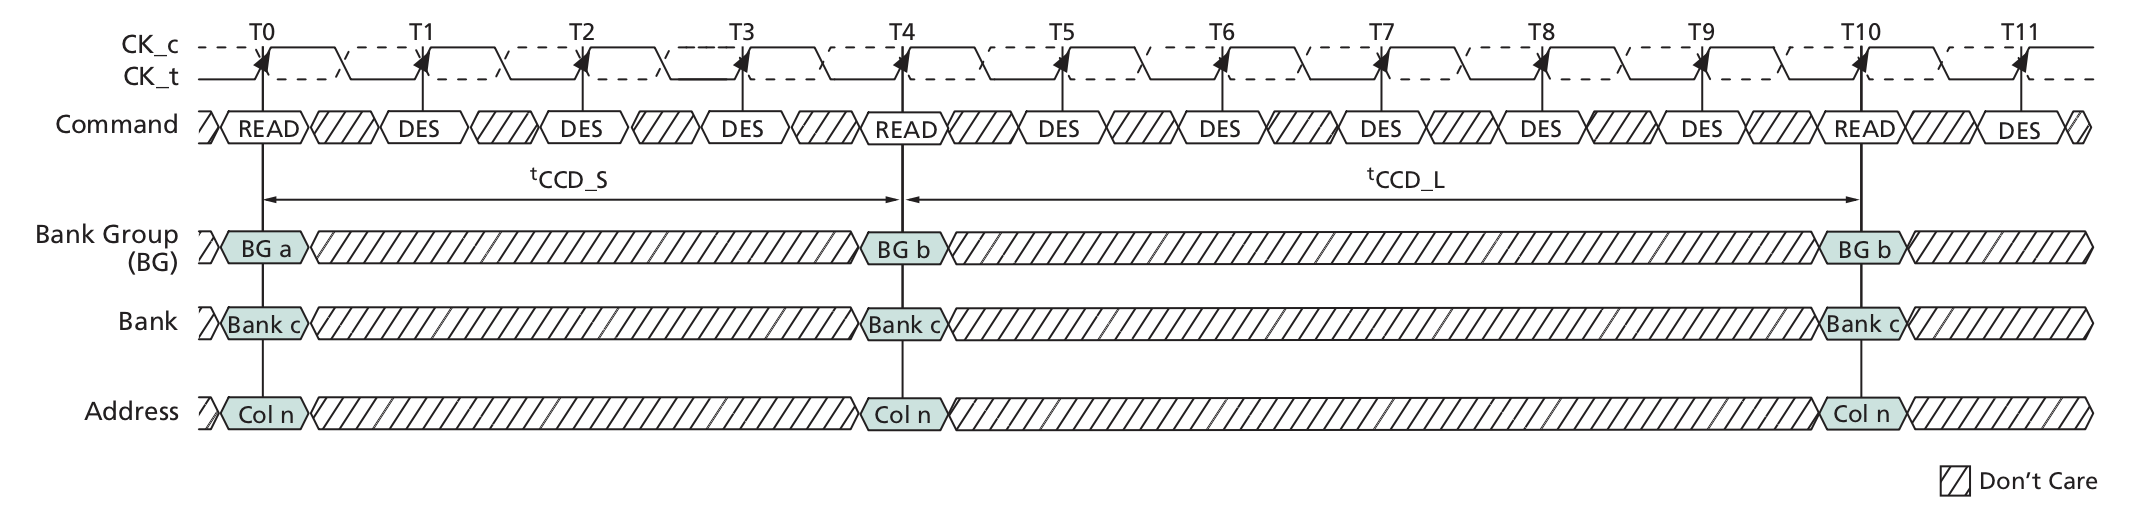 Figure 7: Illustration of tCCD_S and tCCD_L